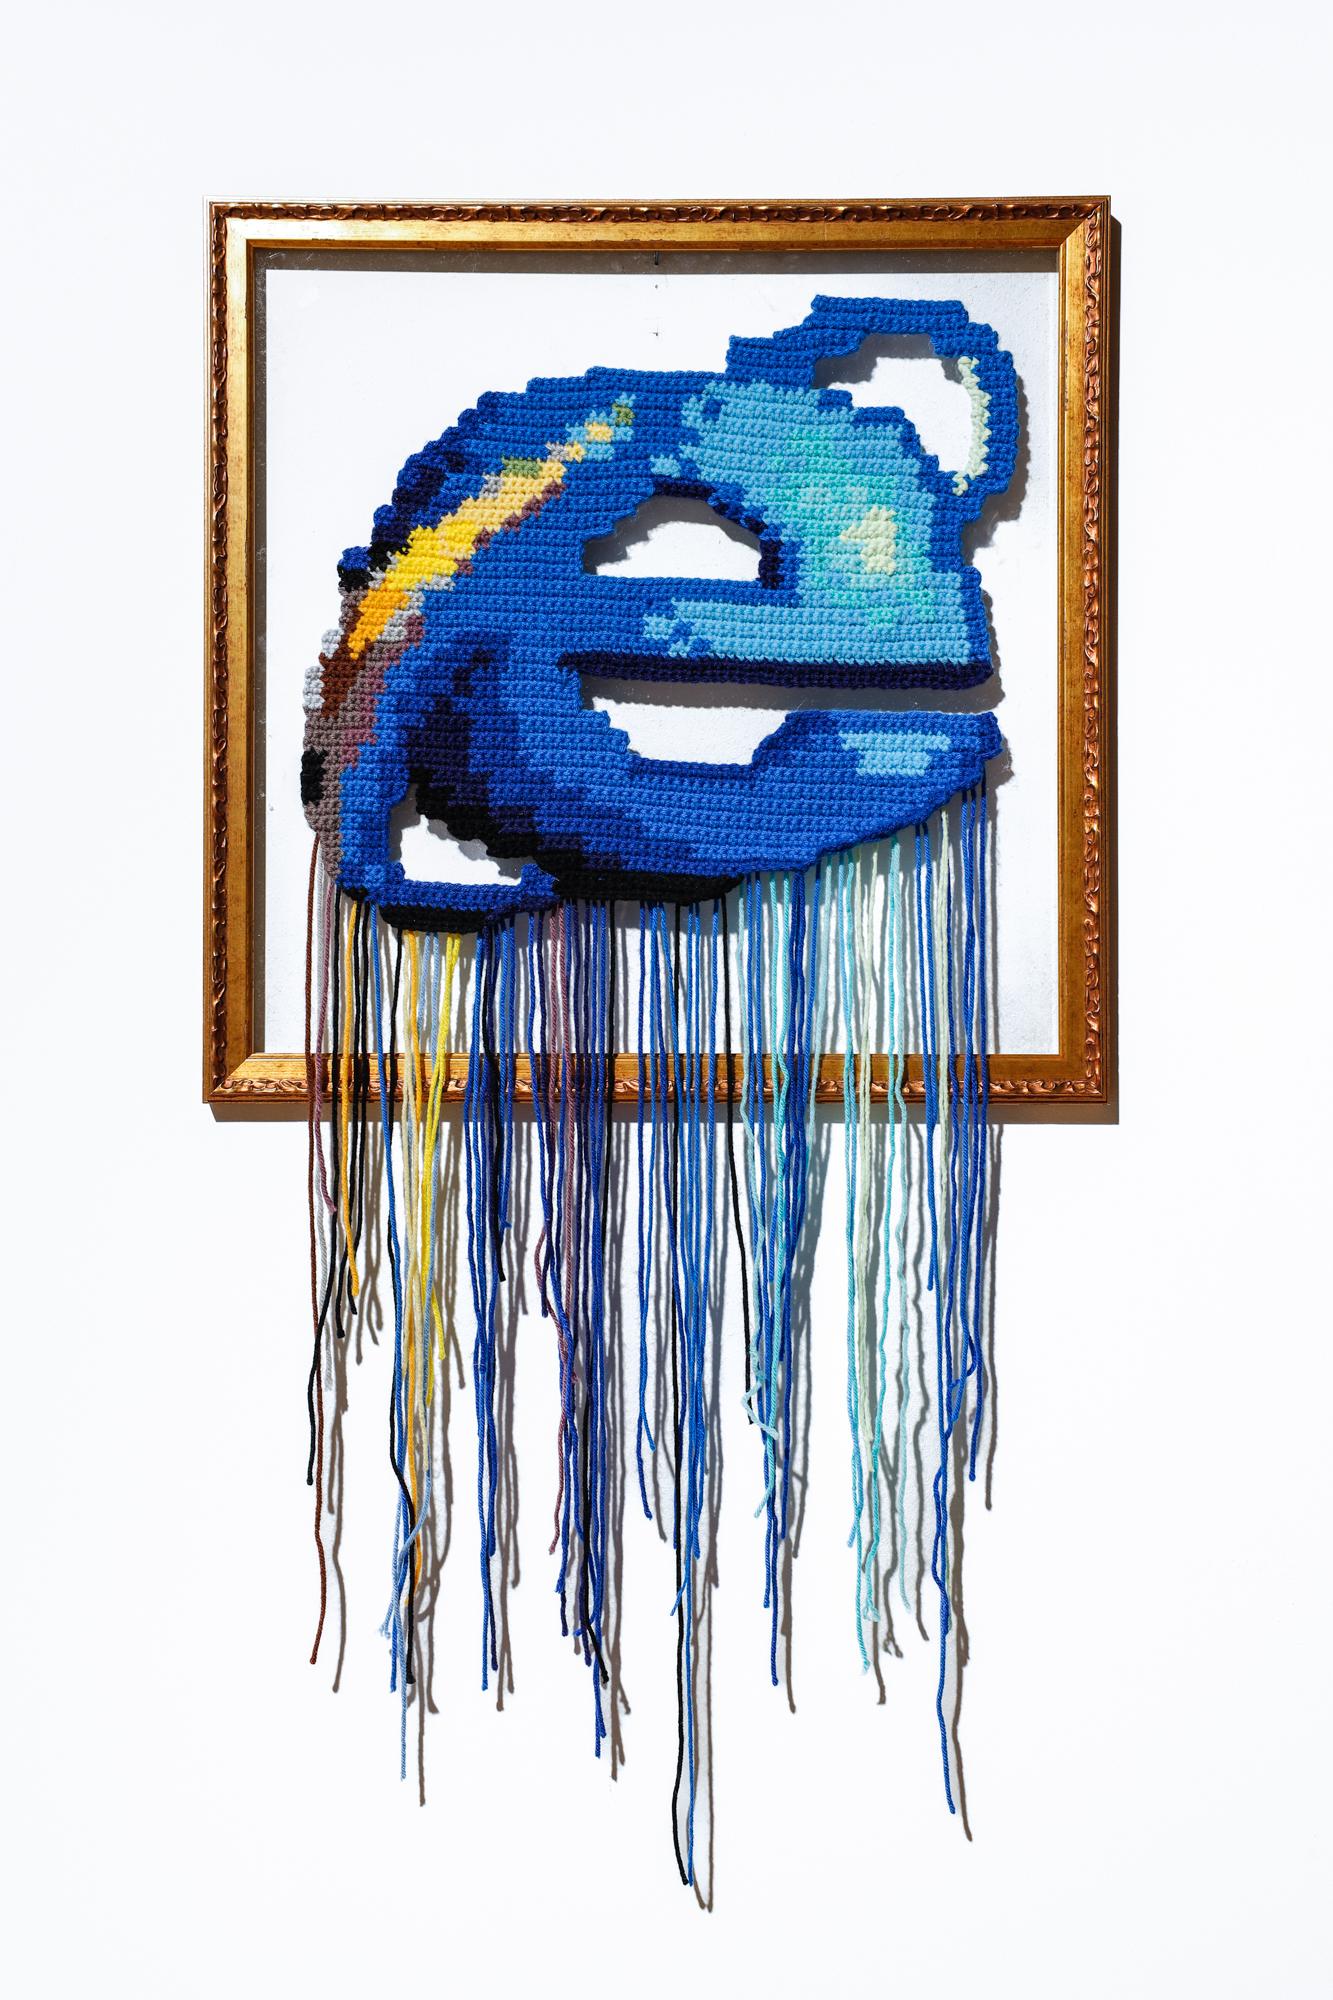 "Internet Explorer", Icônes Internet, Textiles, Crochet Acrylique sur Plexiglas - Mixed Media Art de Nicole Nikolich, Lace in the Moon